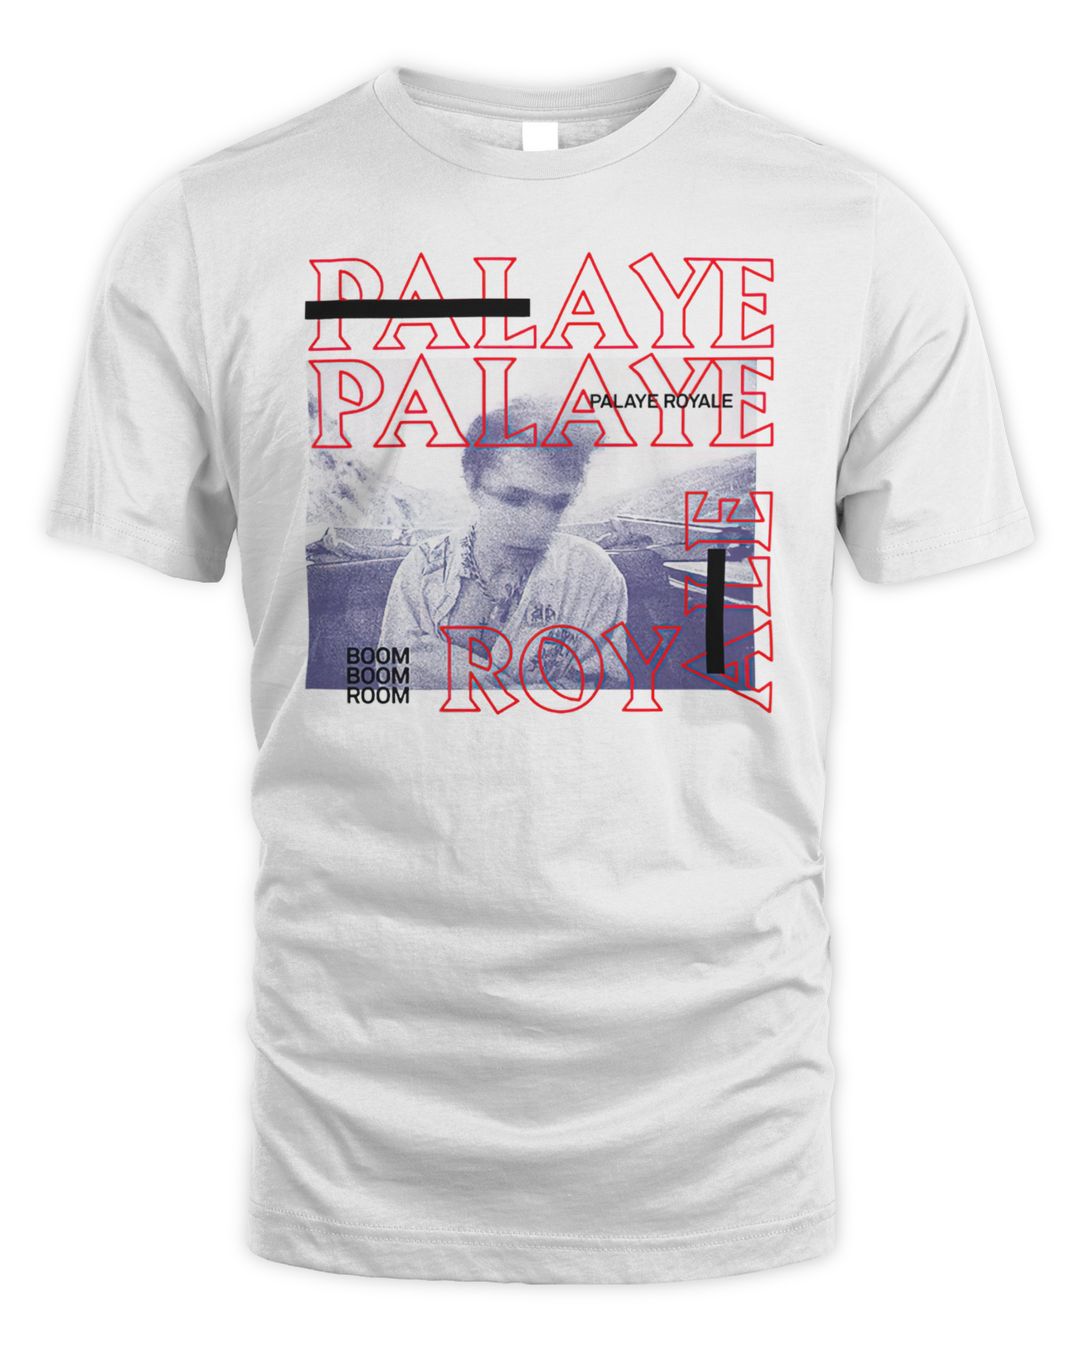 Palaye Royale Merch Photograph Shirt